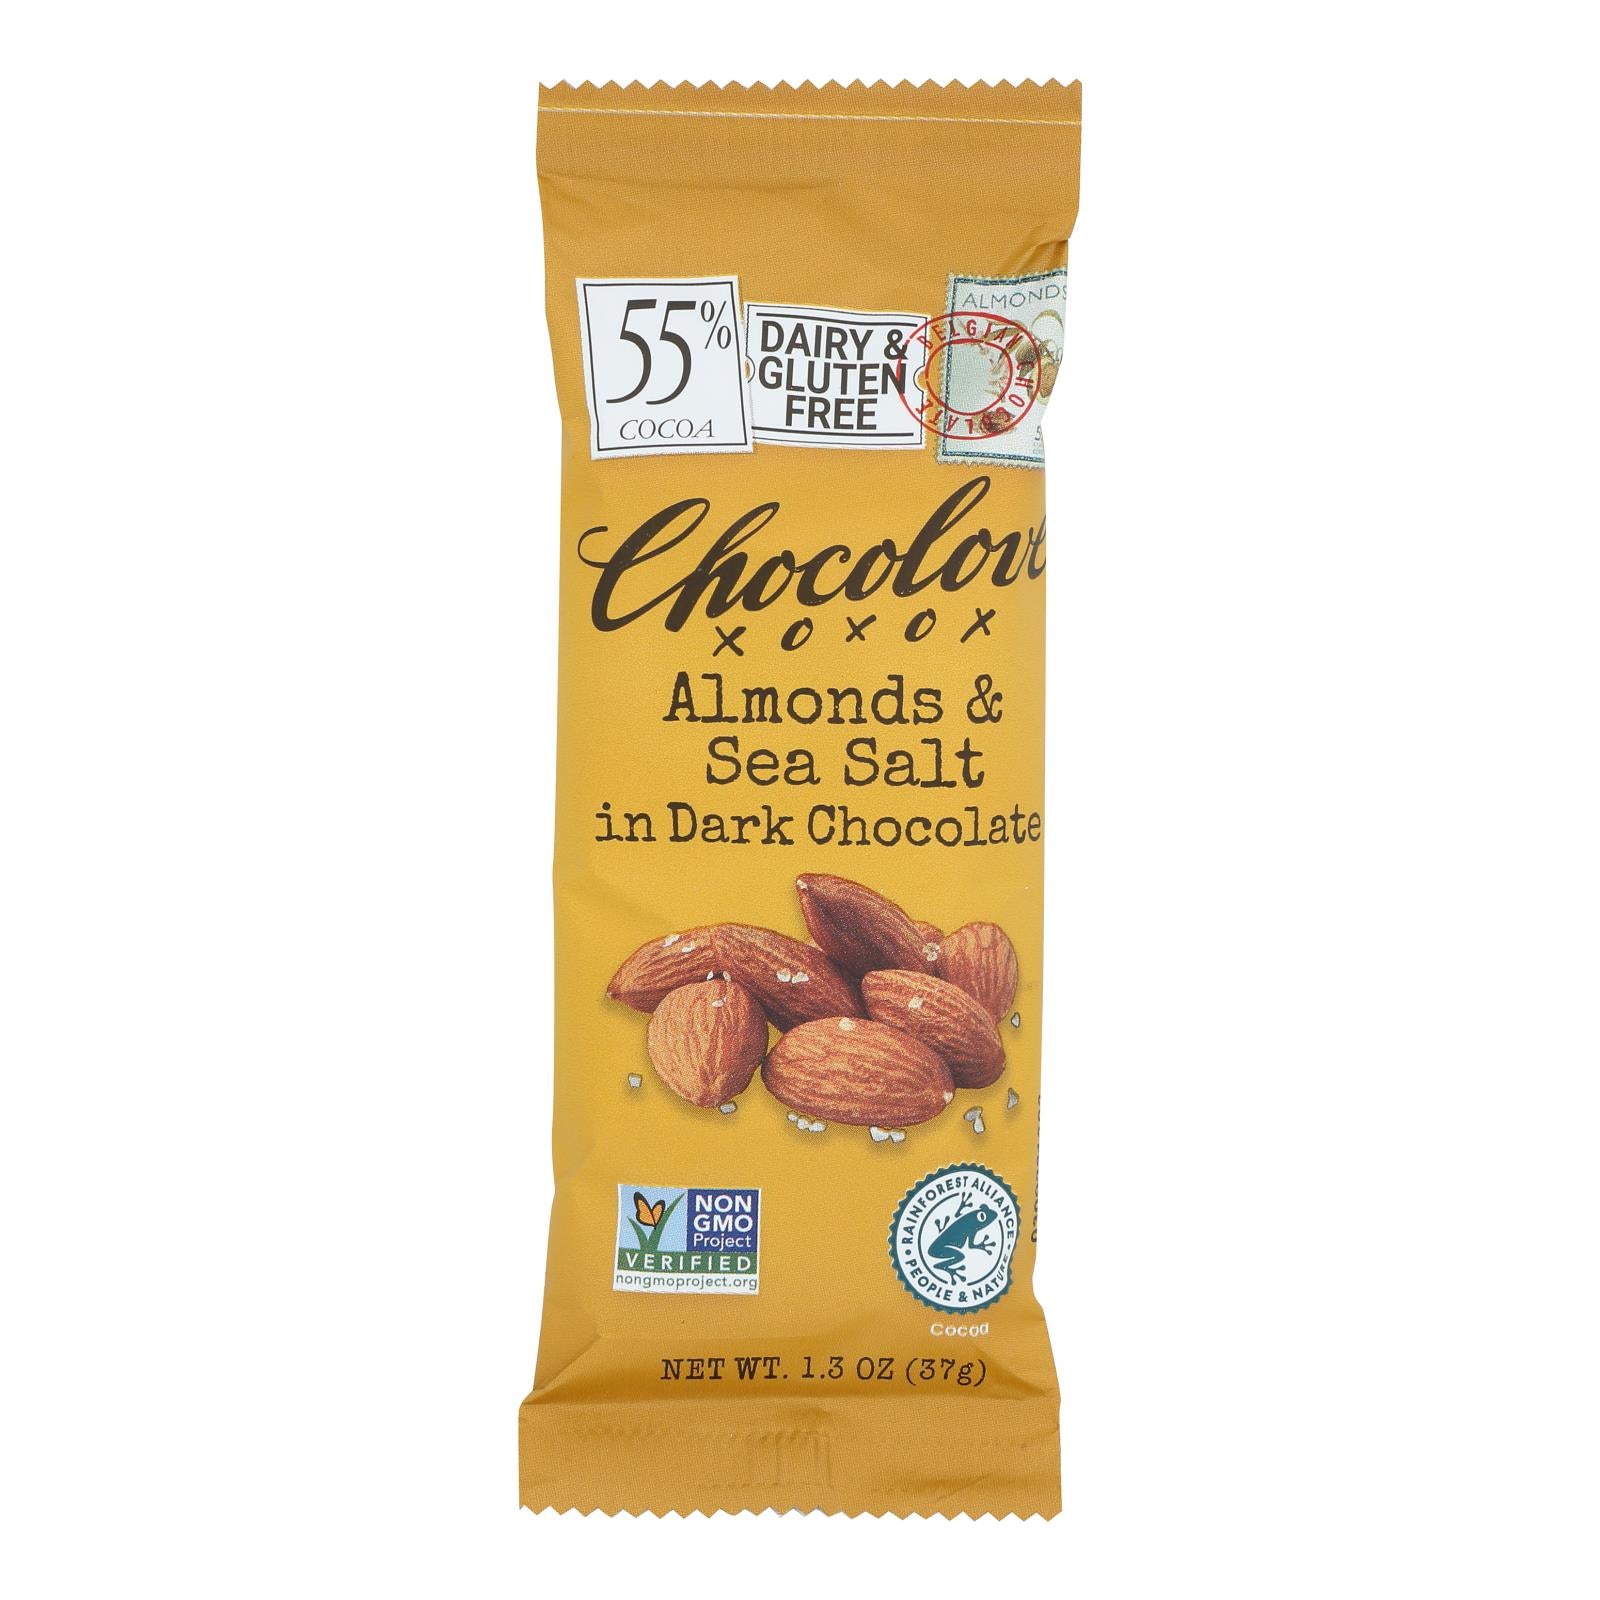 Chocolove Xoxox - Premium Chocolate Bar - Dark Chocolate - Almonds and Sea Salt - Mini 1.3 oz Bars - Case of 12